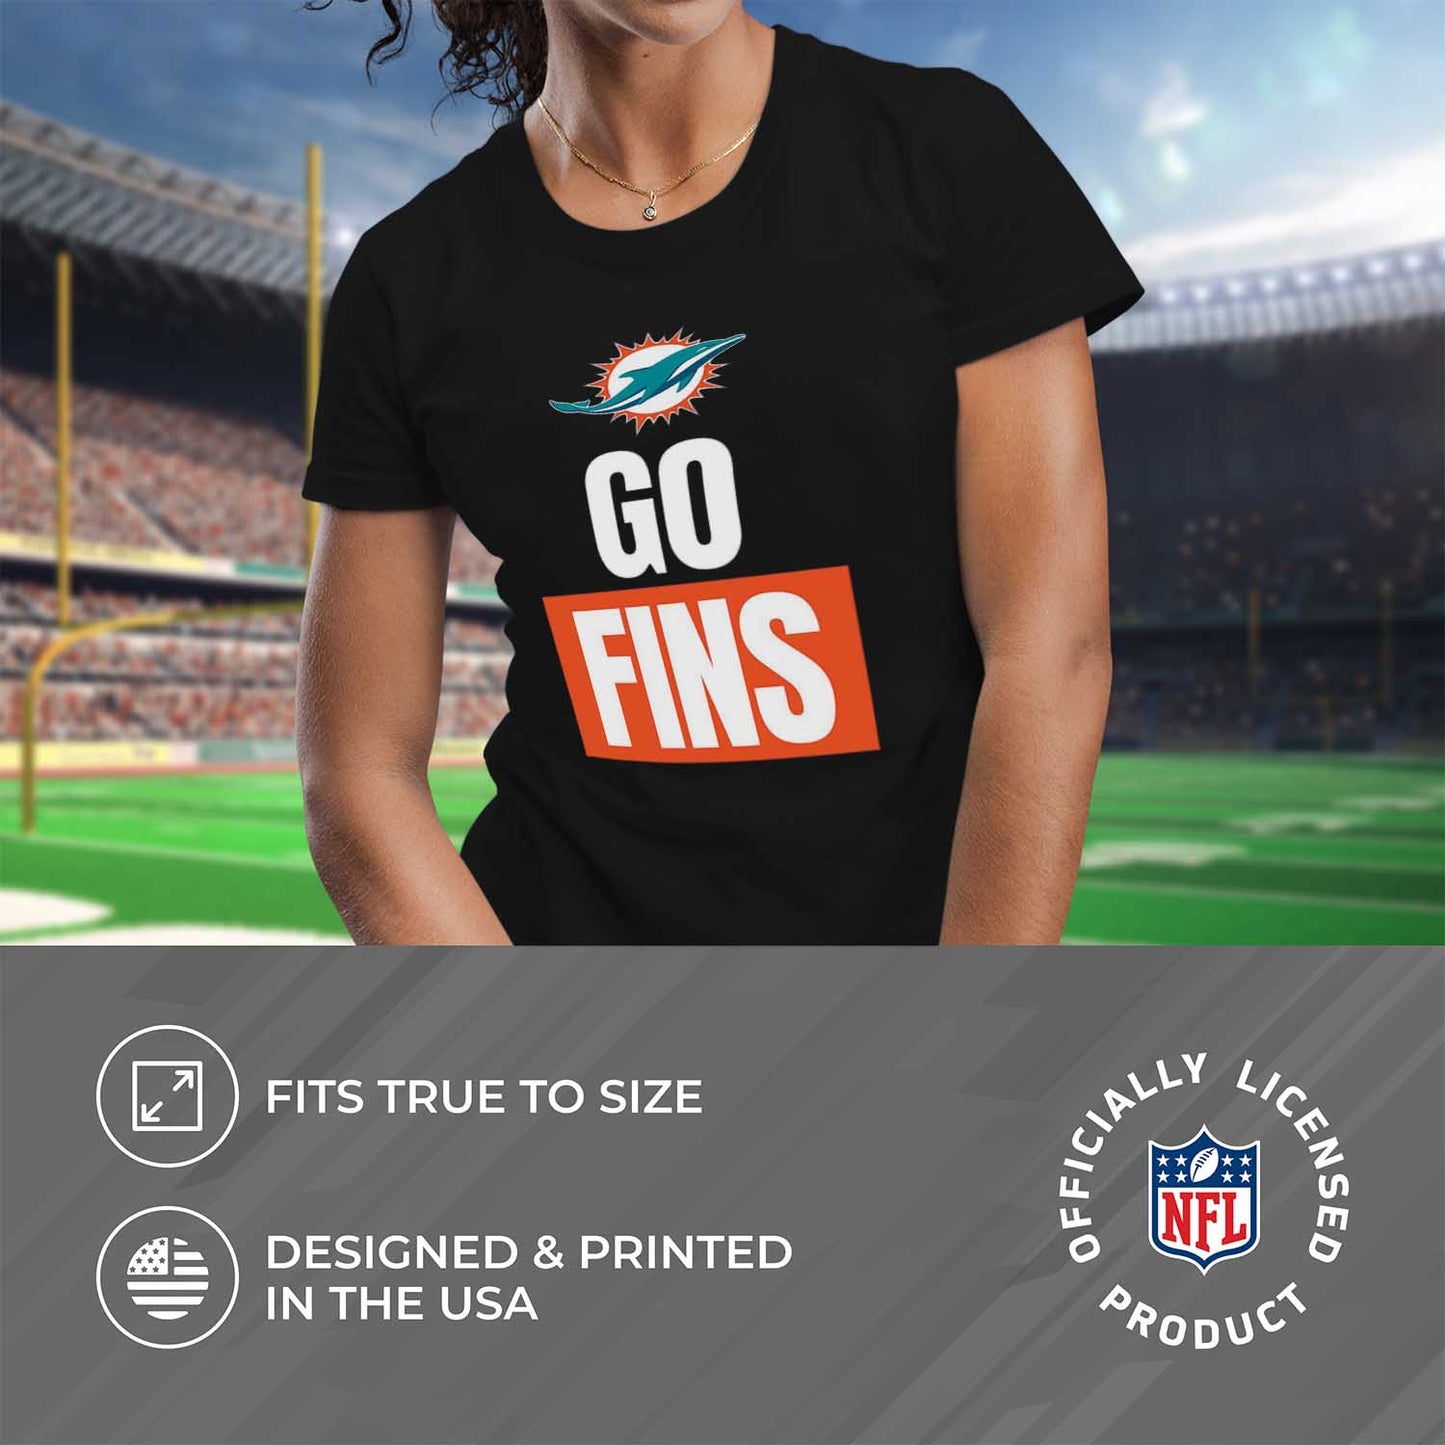 Miami Dolphins NFL Womens Plus Size Team Slogan Short Sleeve T-Shirt - Black